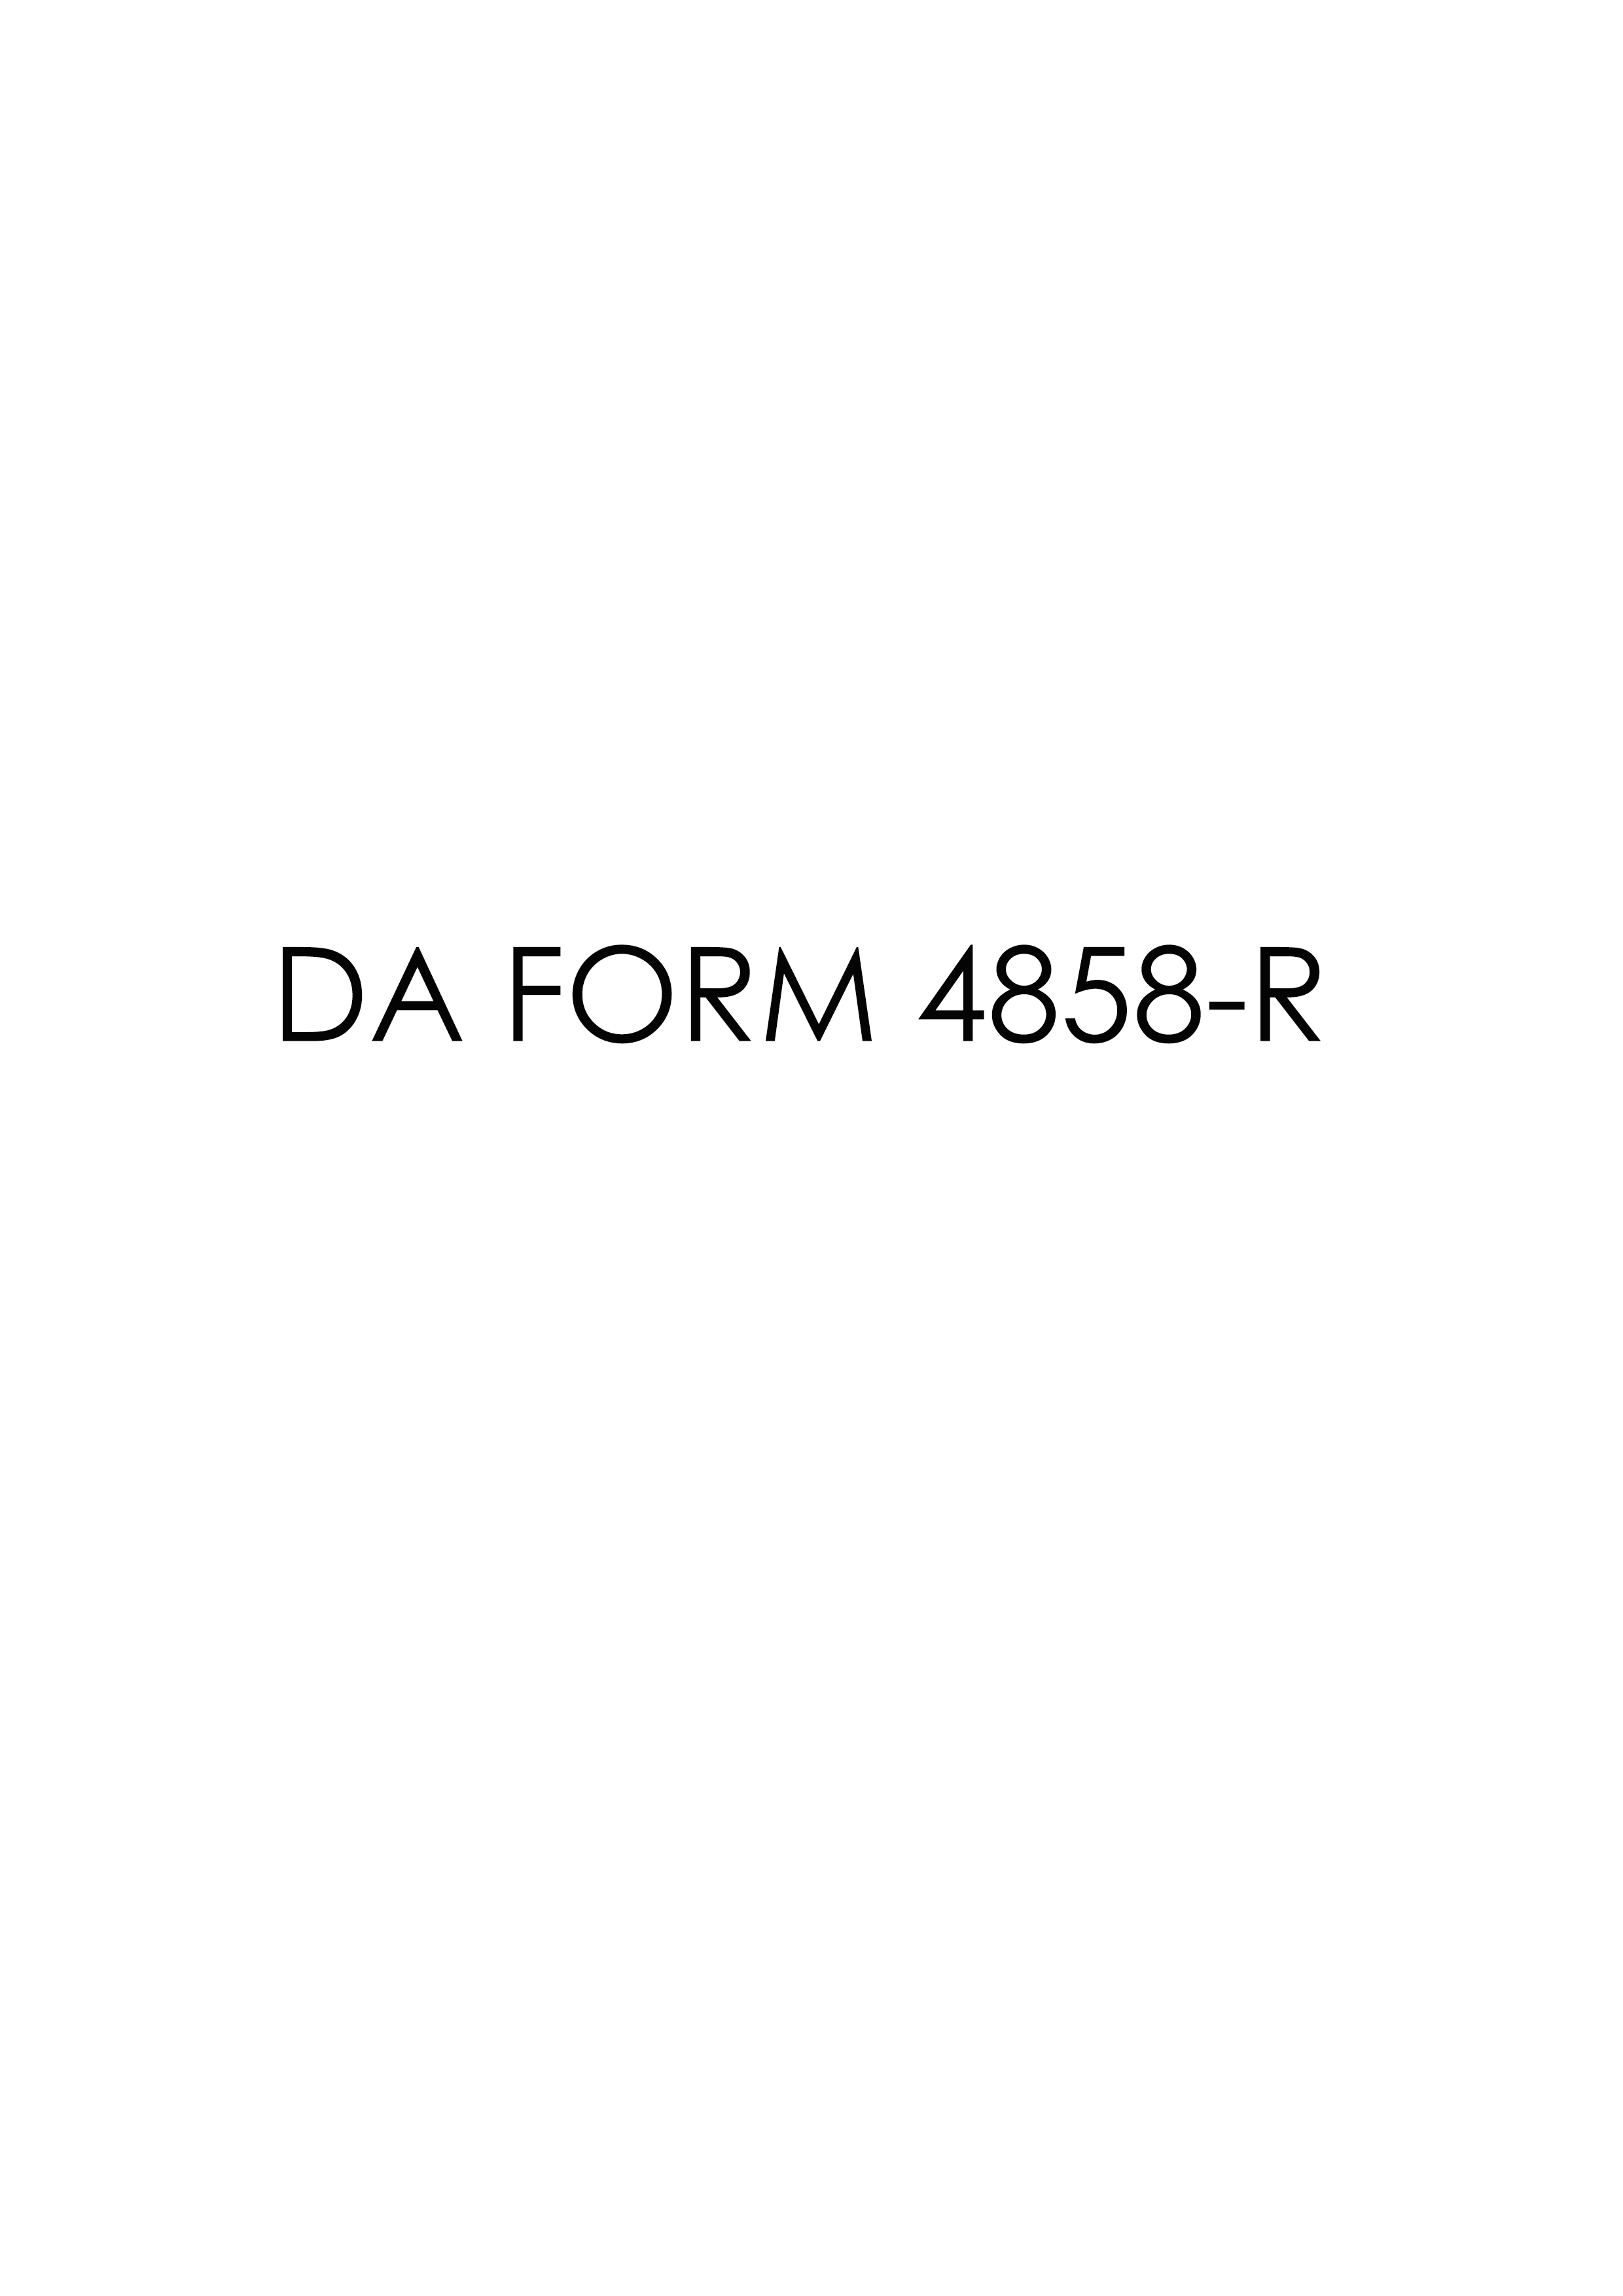 da Form 4858-R fillable